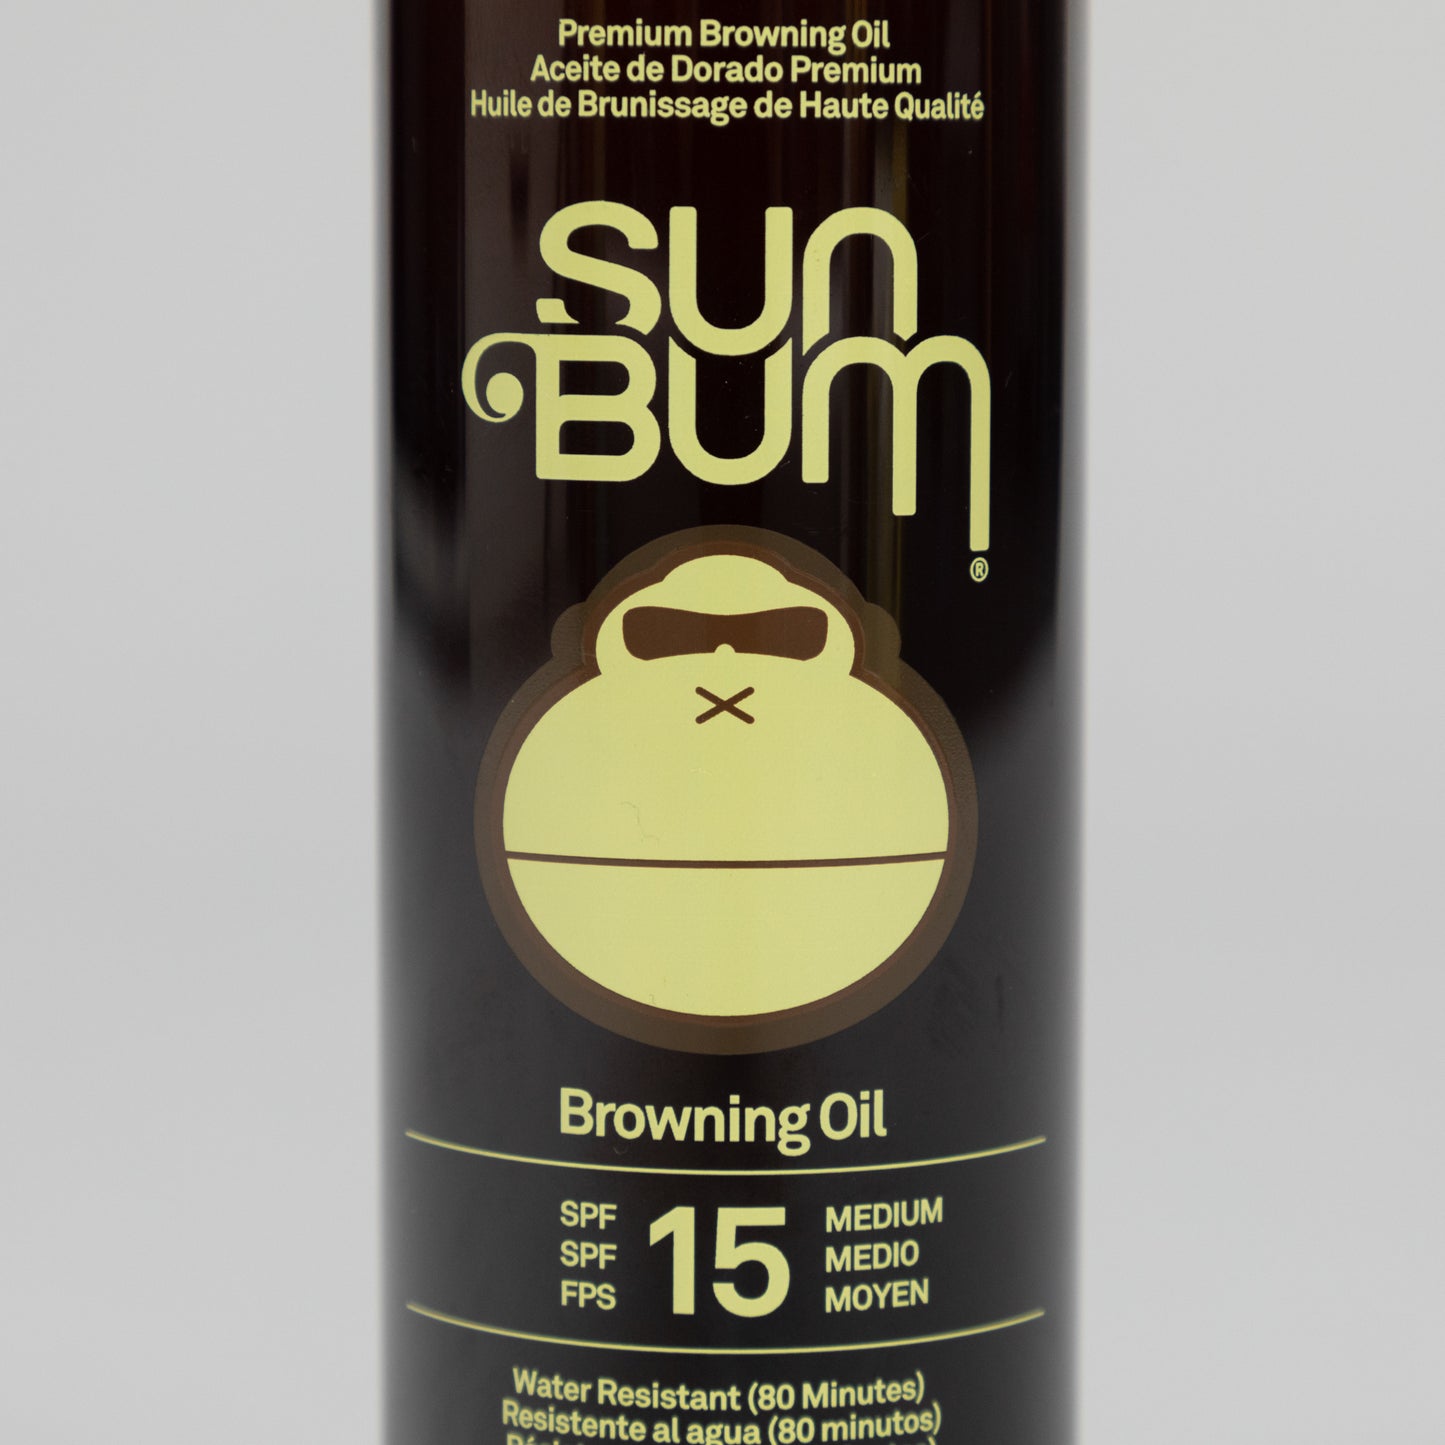 SUN BUM SPF 15 Browning Oil (250ml)